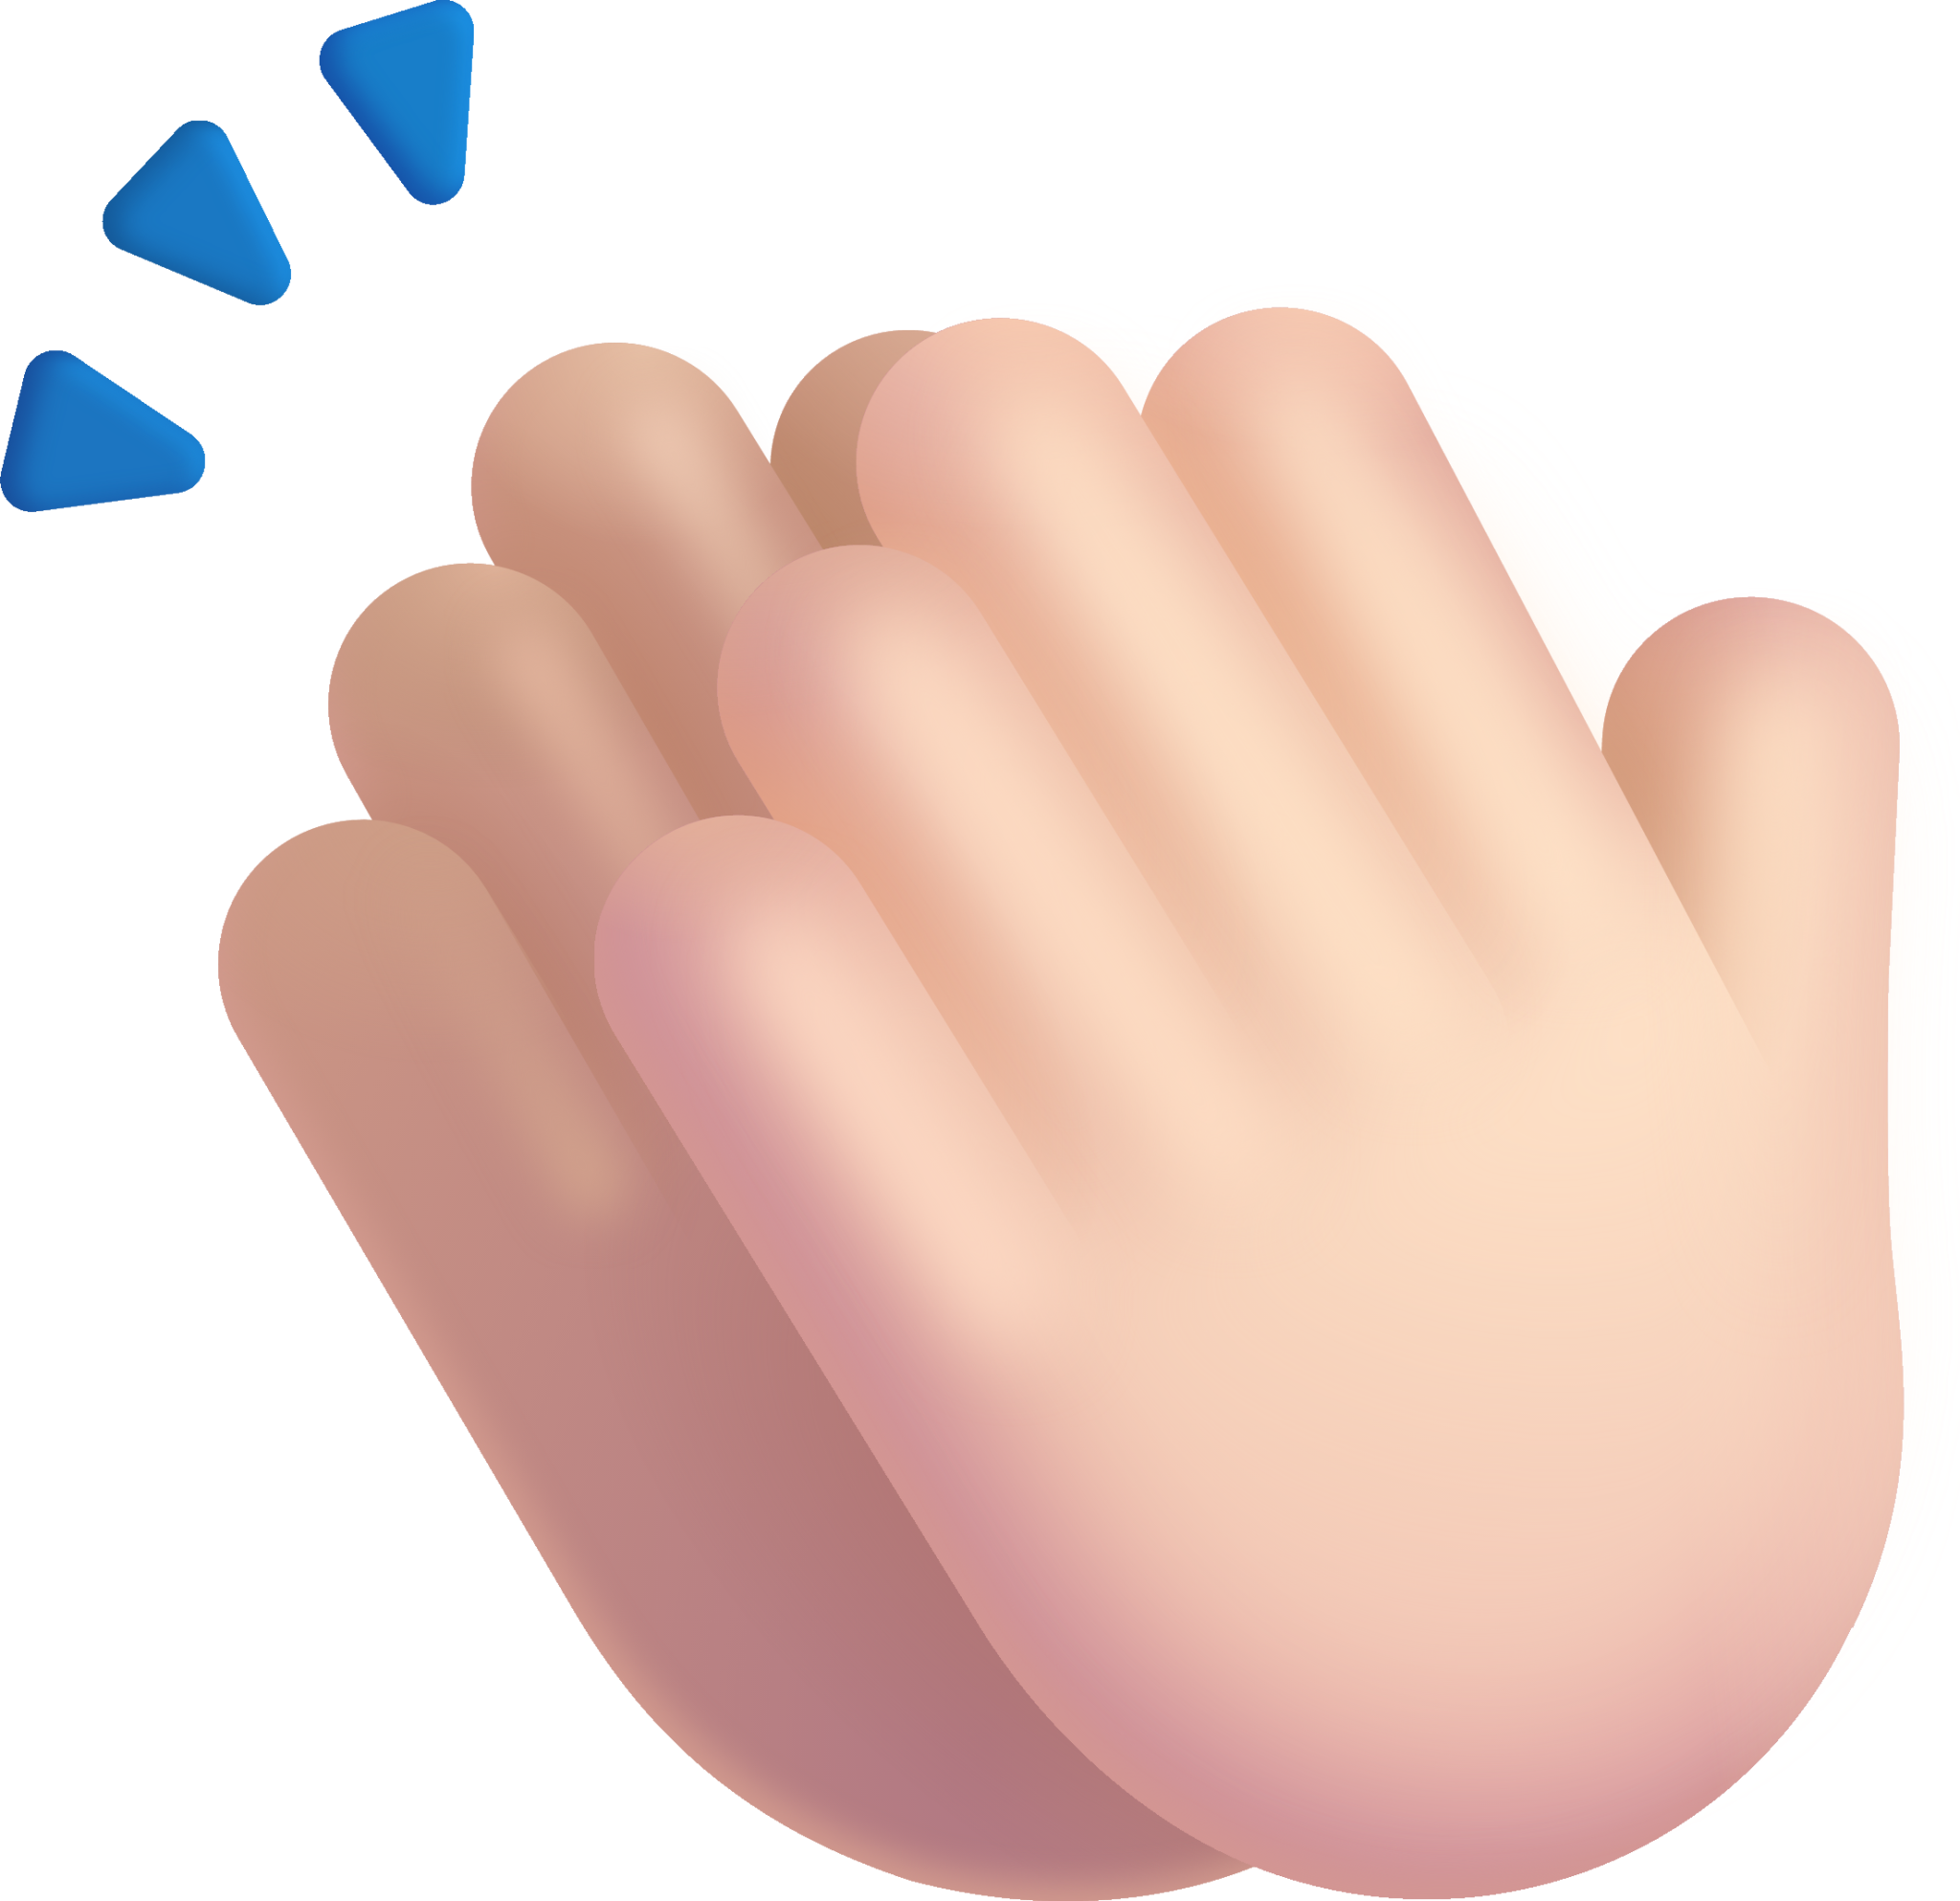 clapping hands light emoji